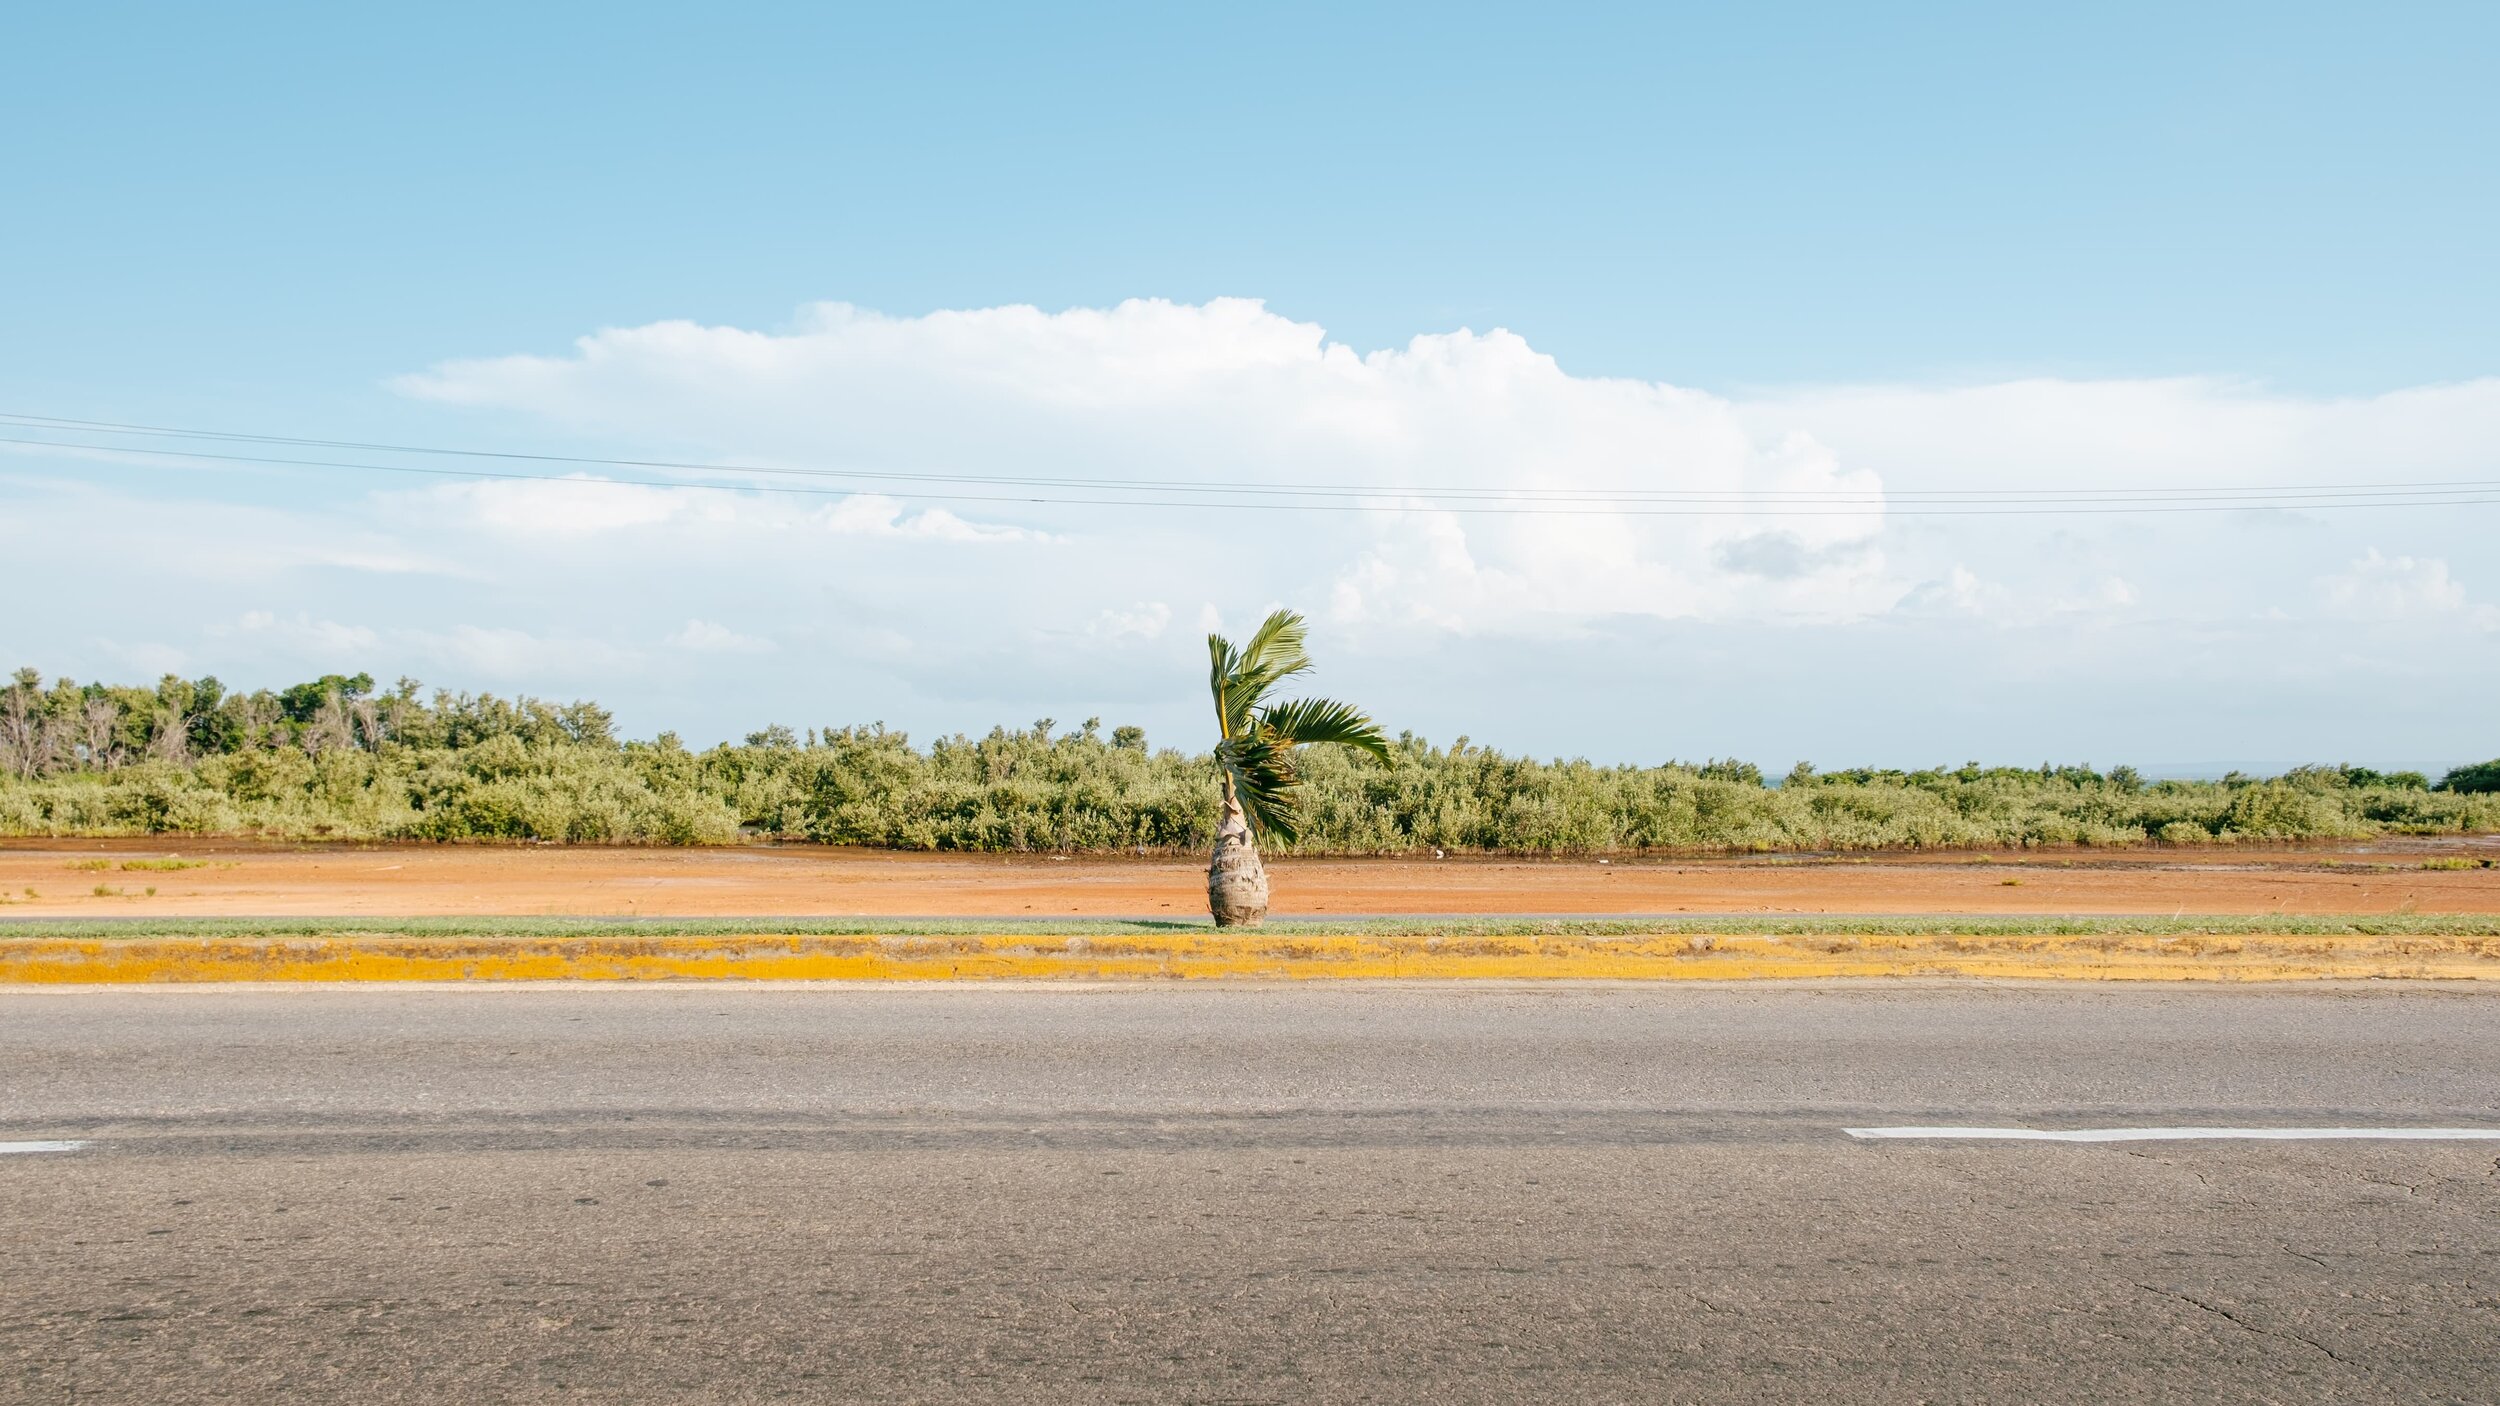 Highway Palm Tree